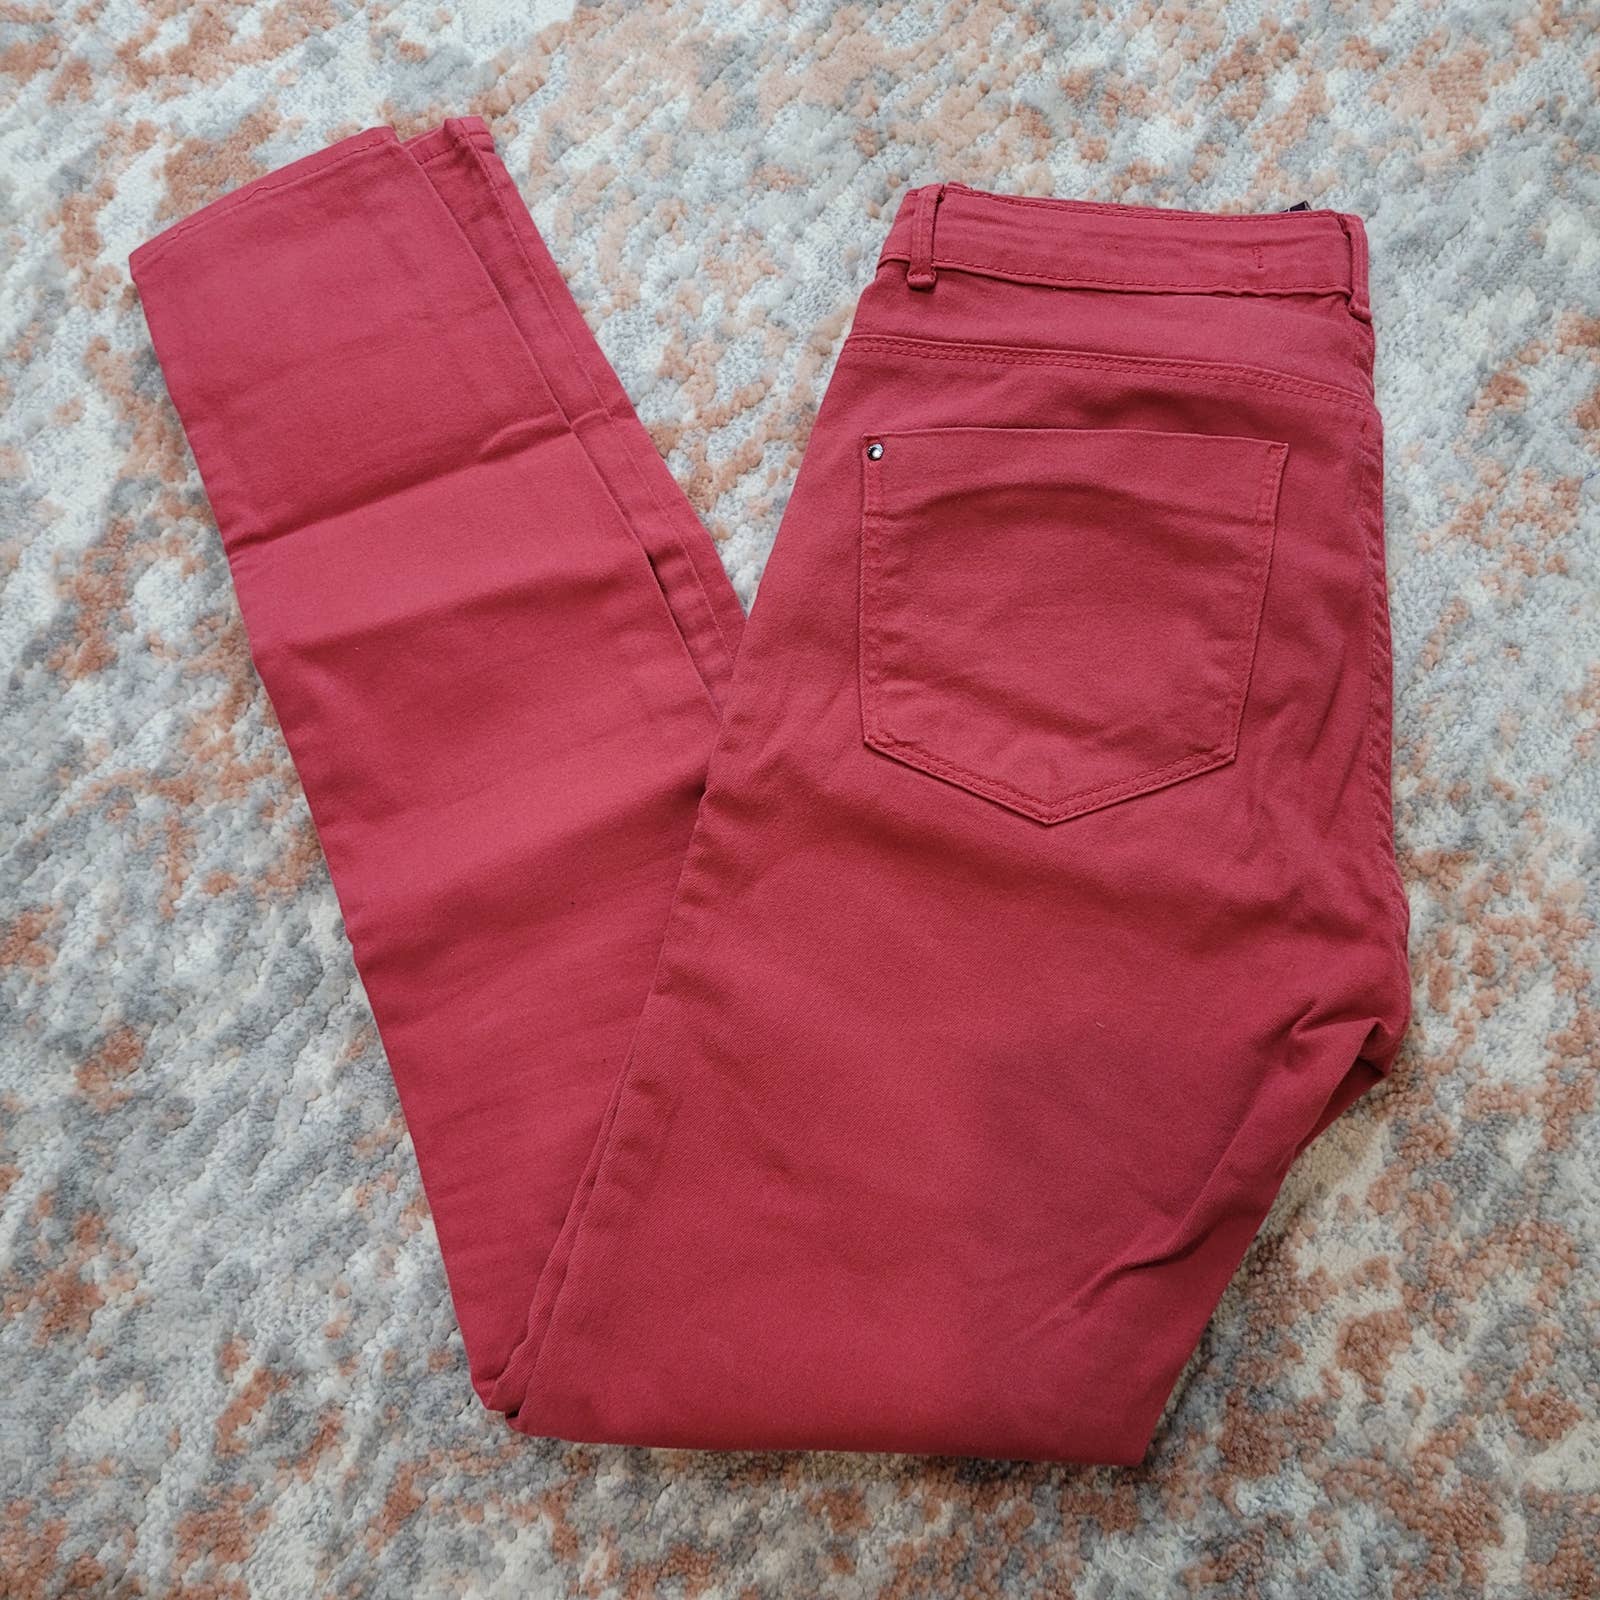 Marfinno Denim Red Skinny Jeans - Size EU 36Markita's ClosetMarfinno Denim